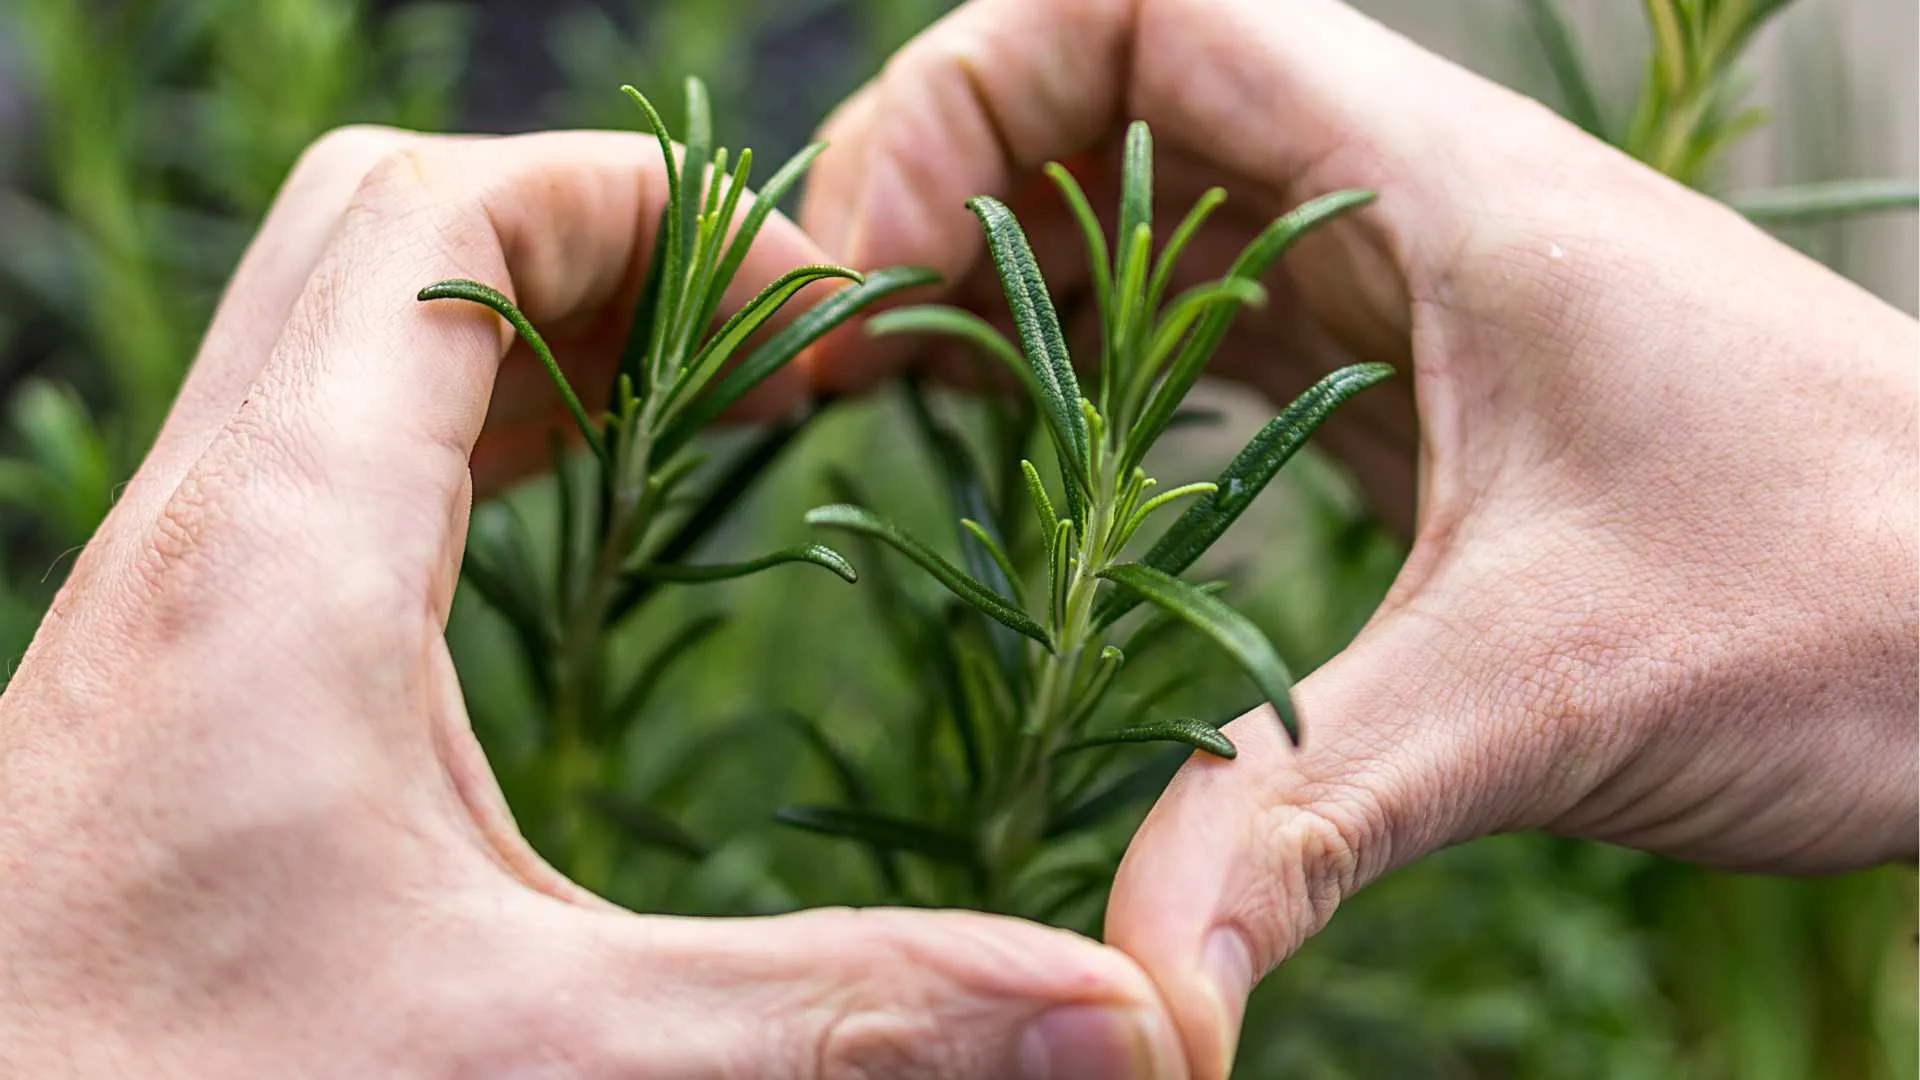 Healing Gardens: The Therapeutic Benefits of Community Gardening